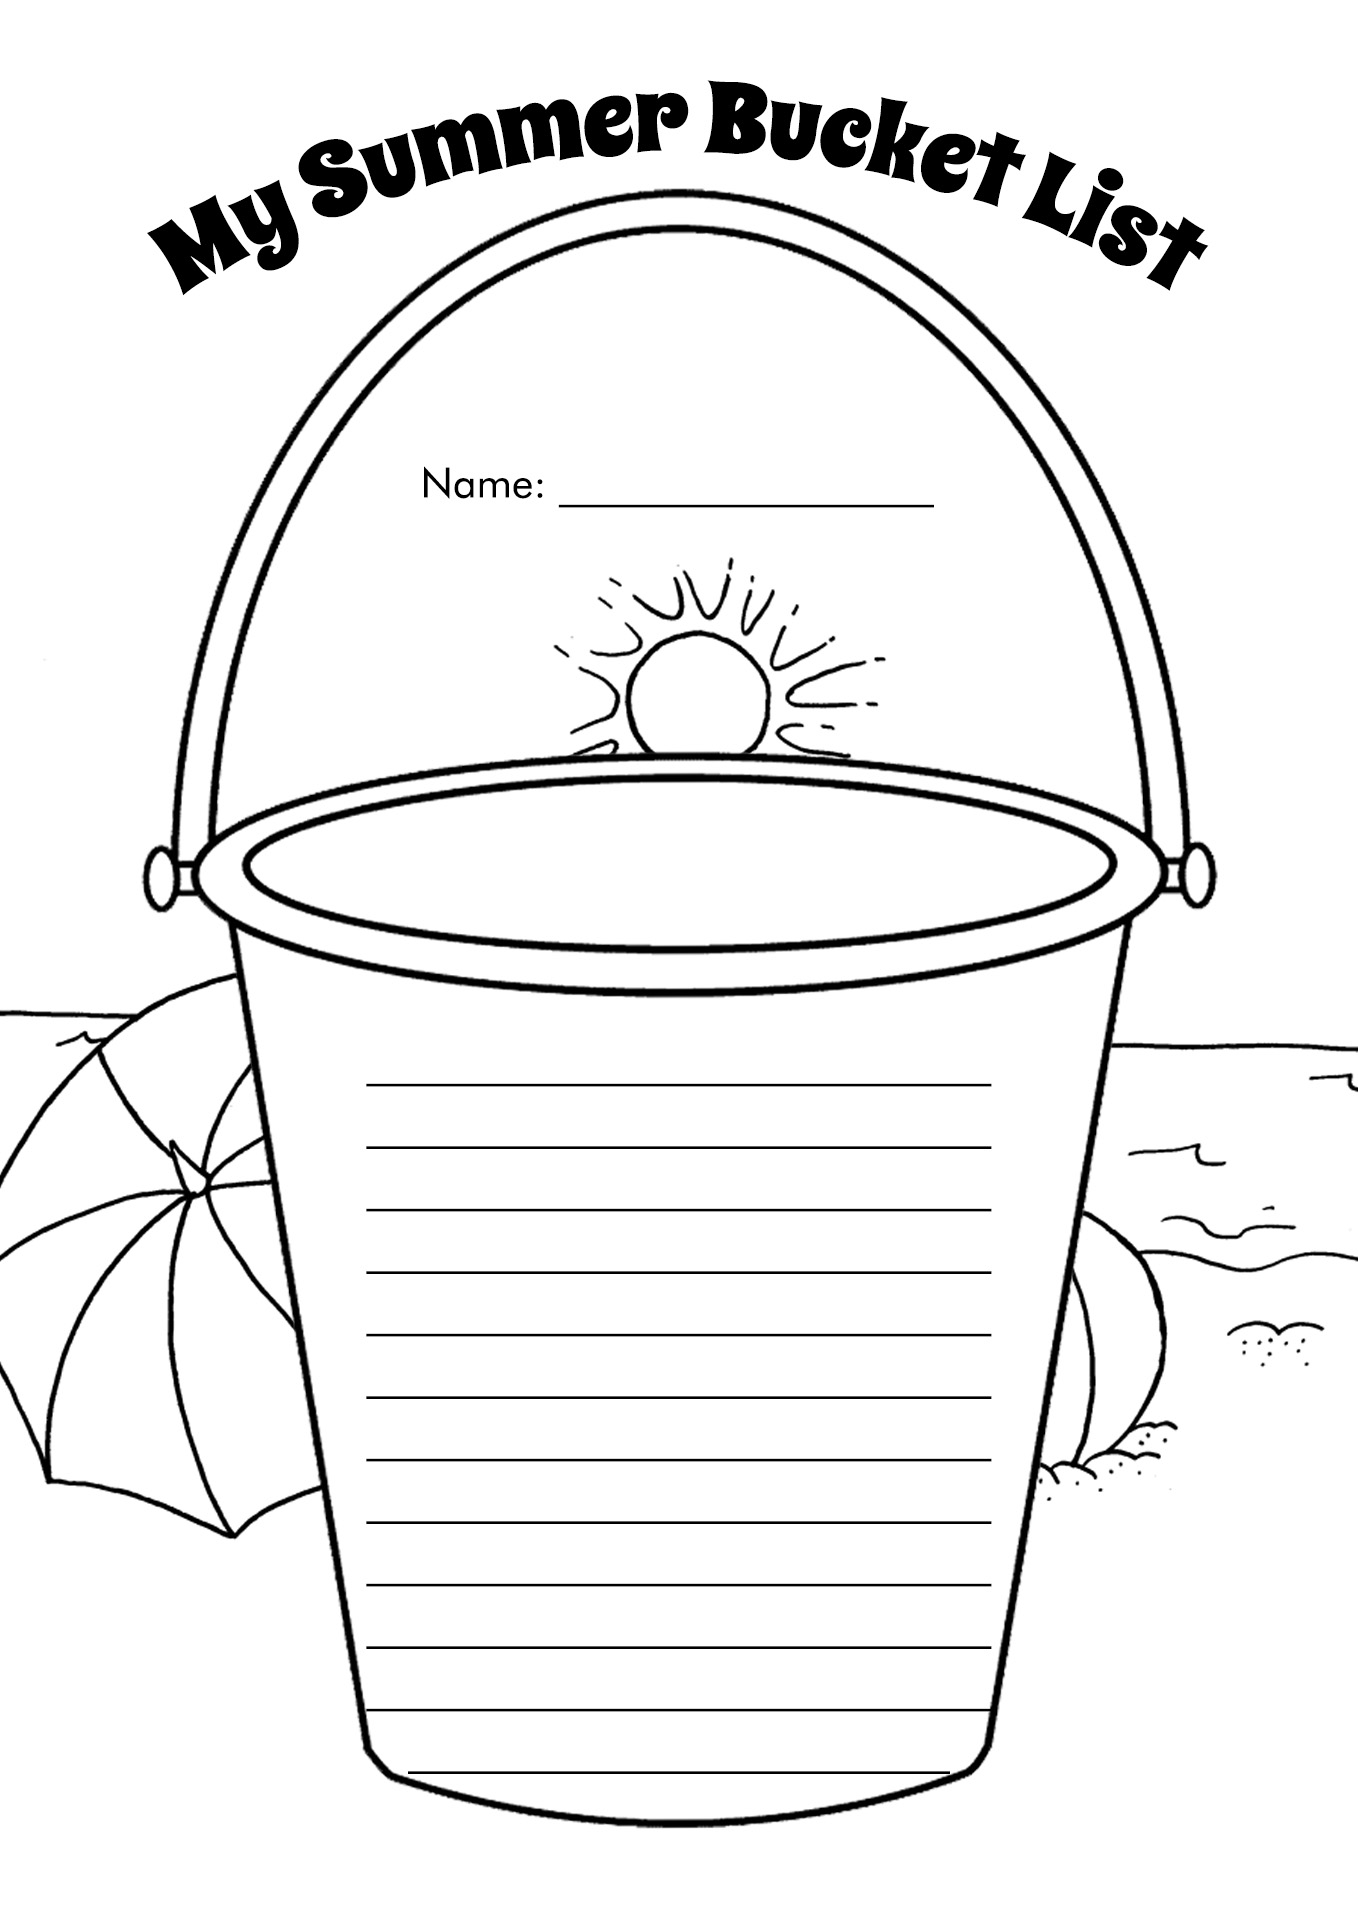 Summer Bucket List Writing Activity Image